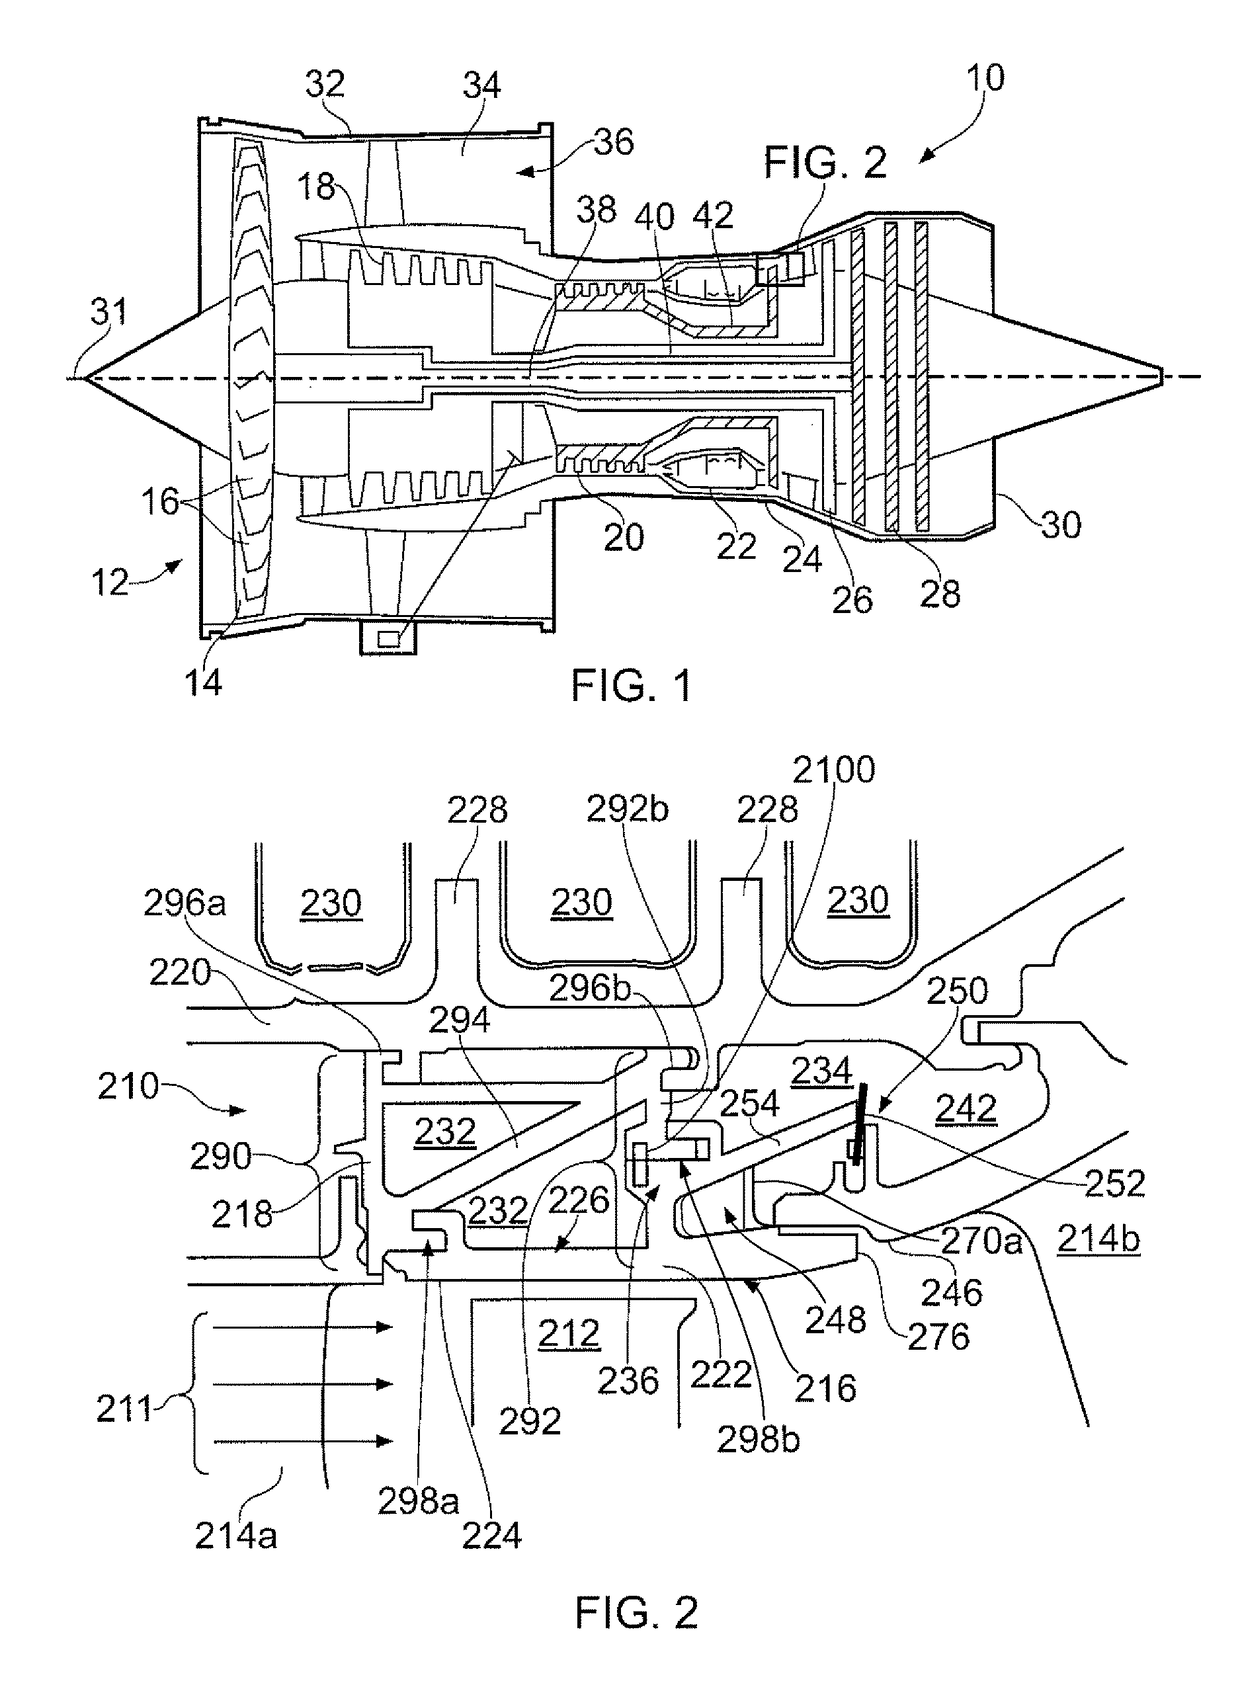 Shroud arrangement for a gas turbine engine